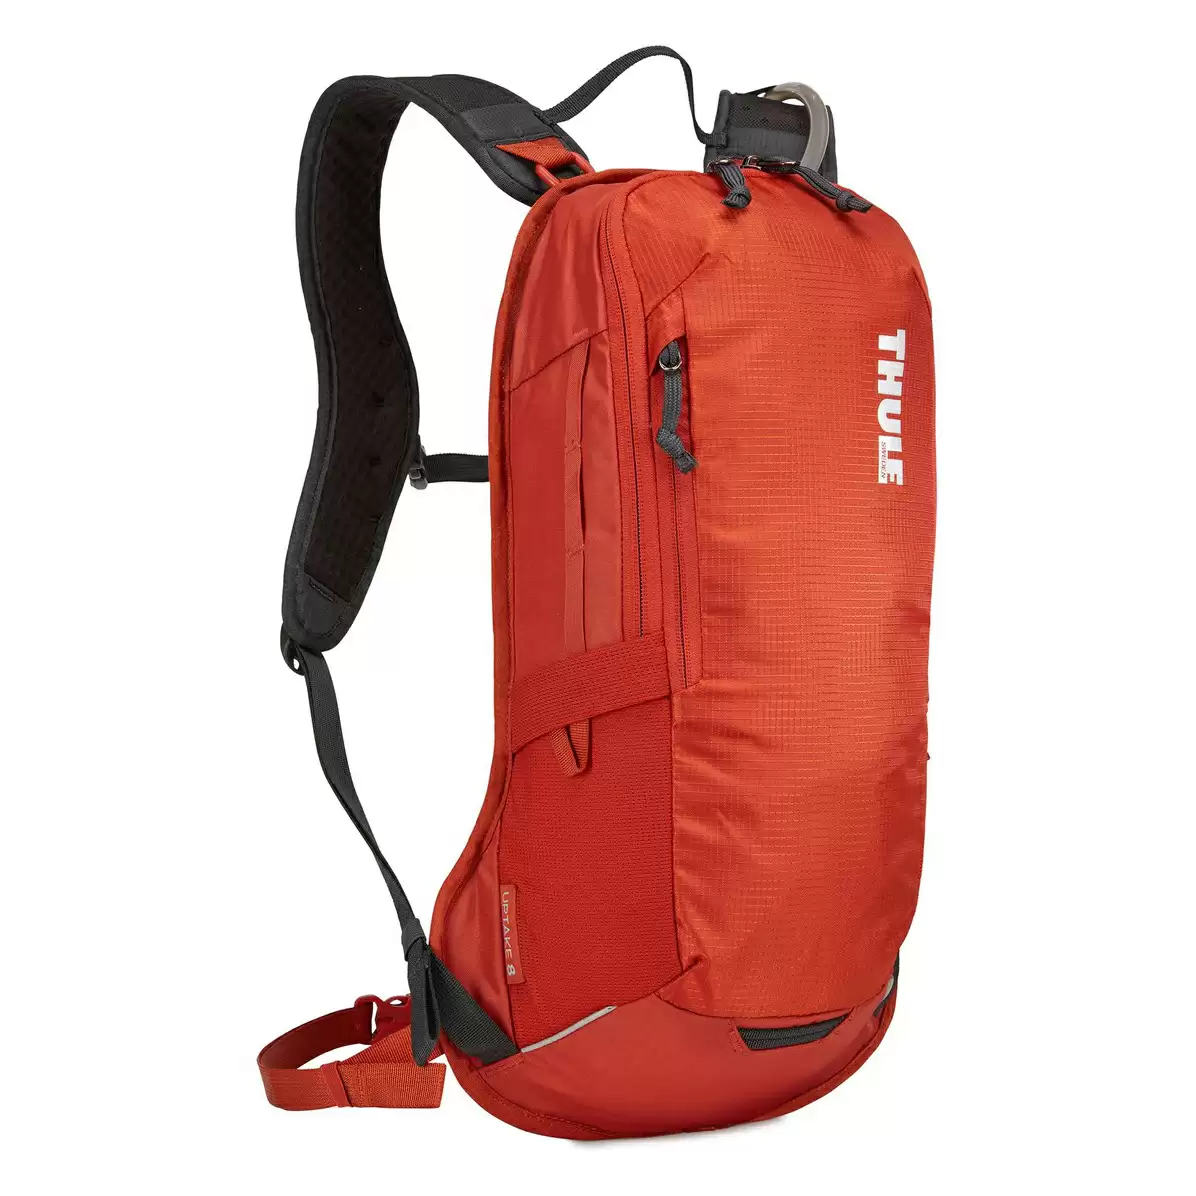 Water backpack UpTake 8L red - image